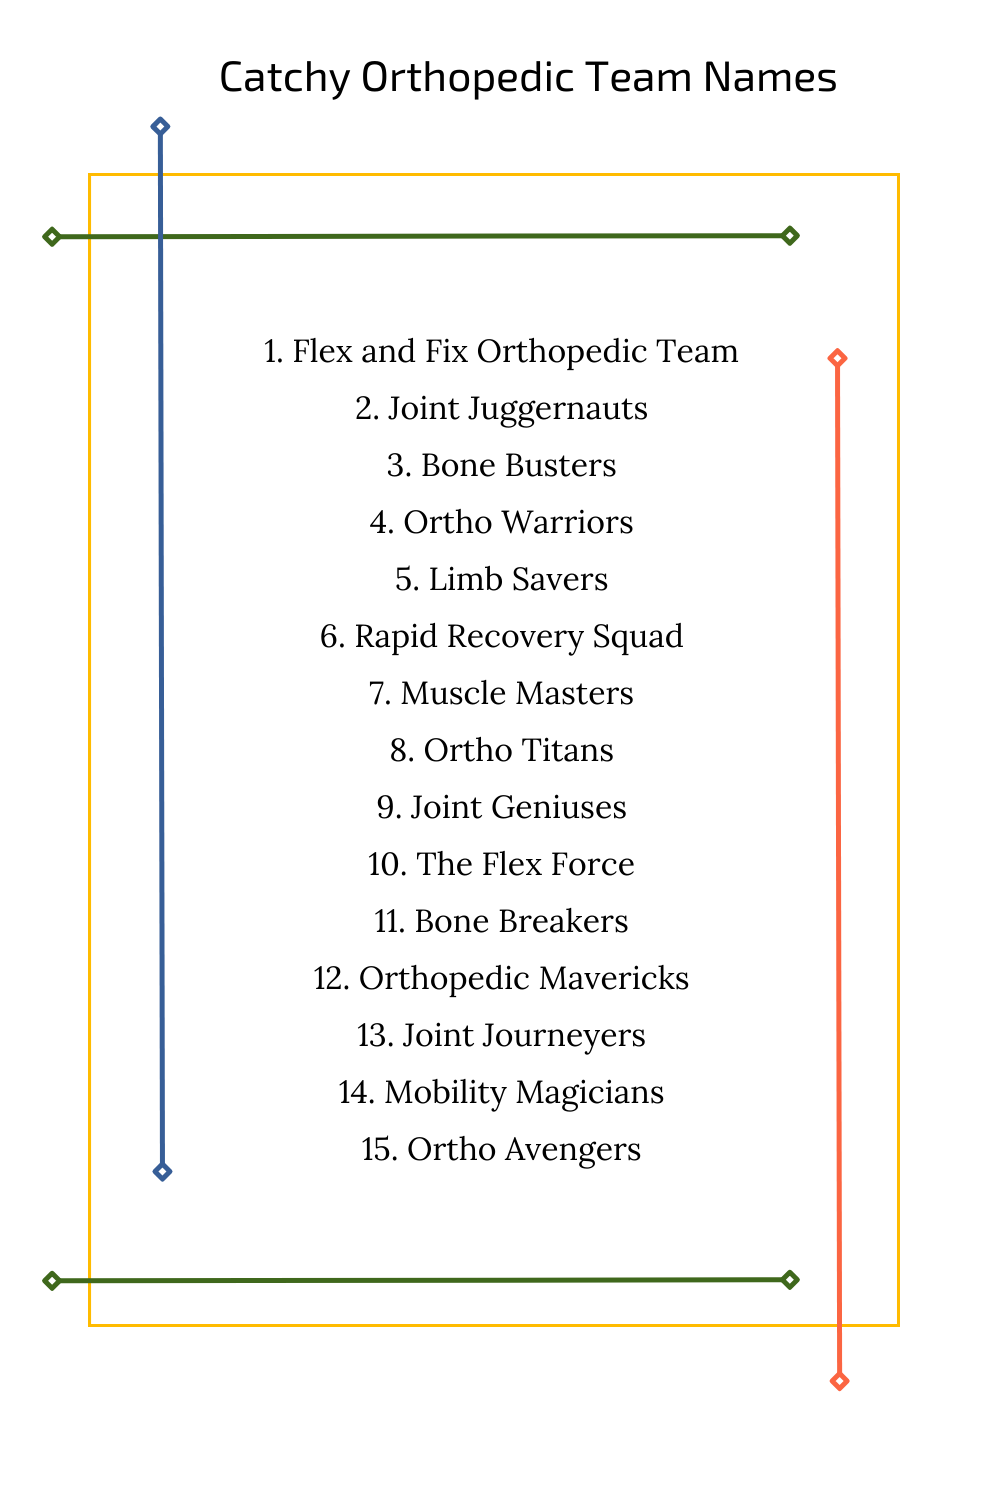 Catchy Orthopedic Team Names